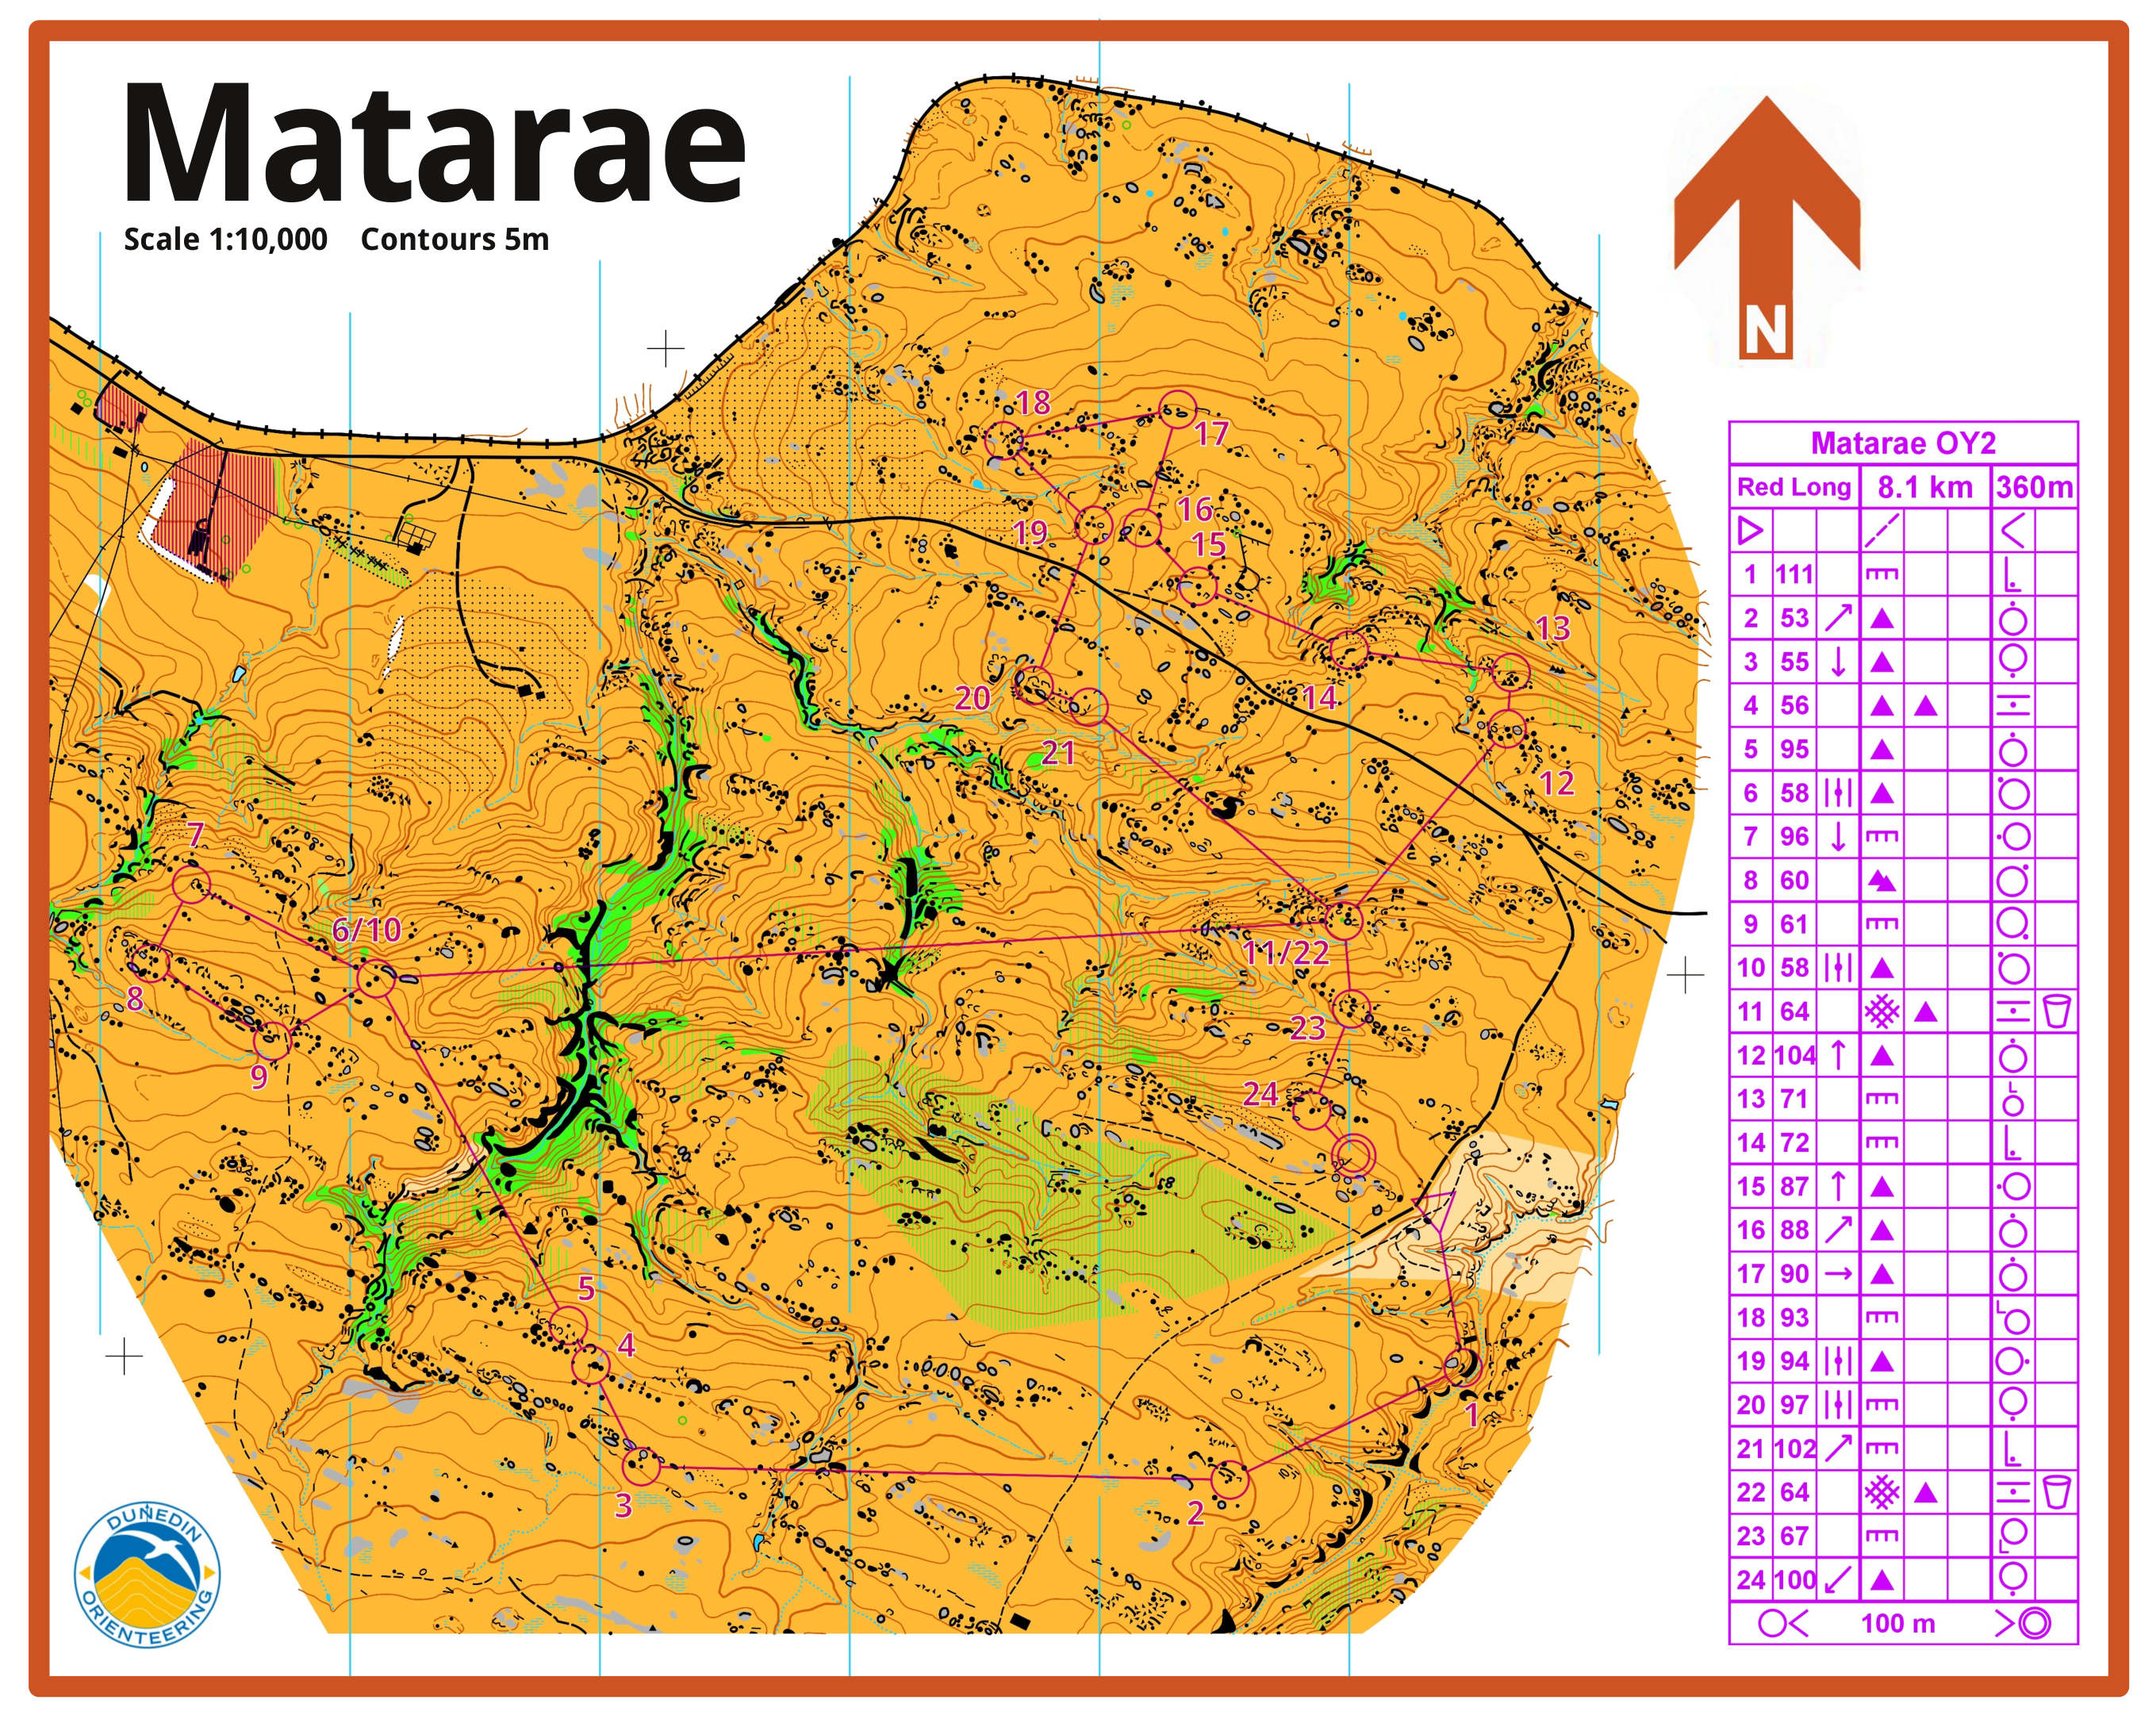 Matarae OY2 (17/05/2015)